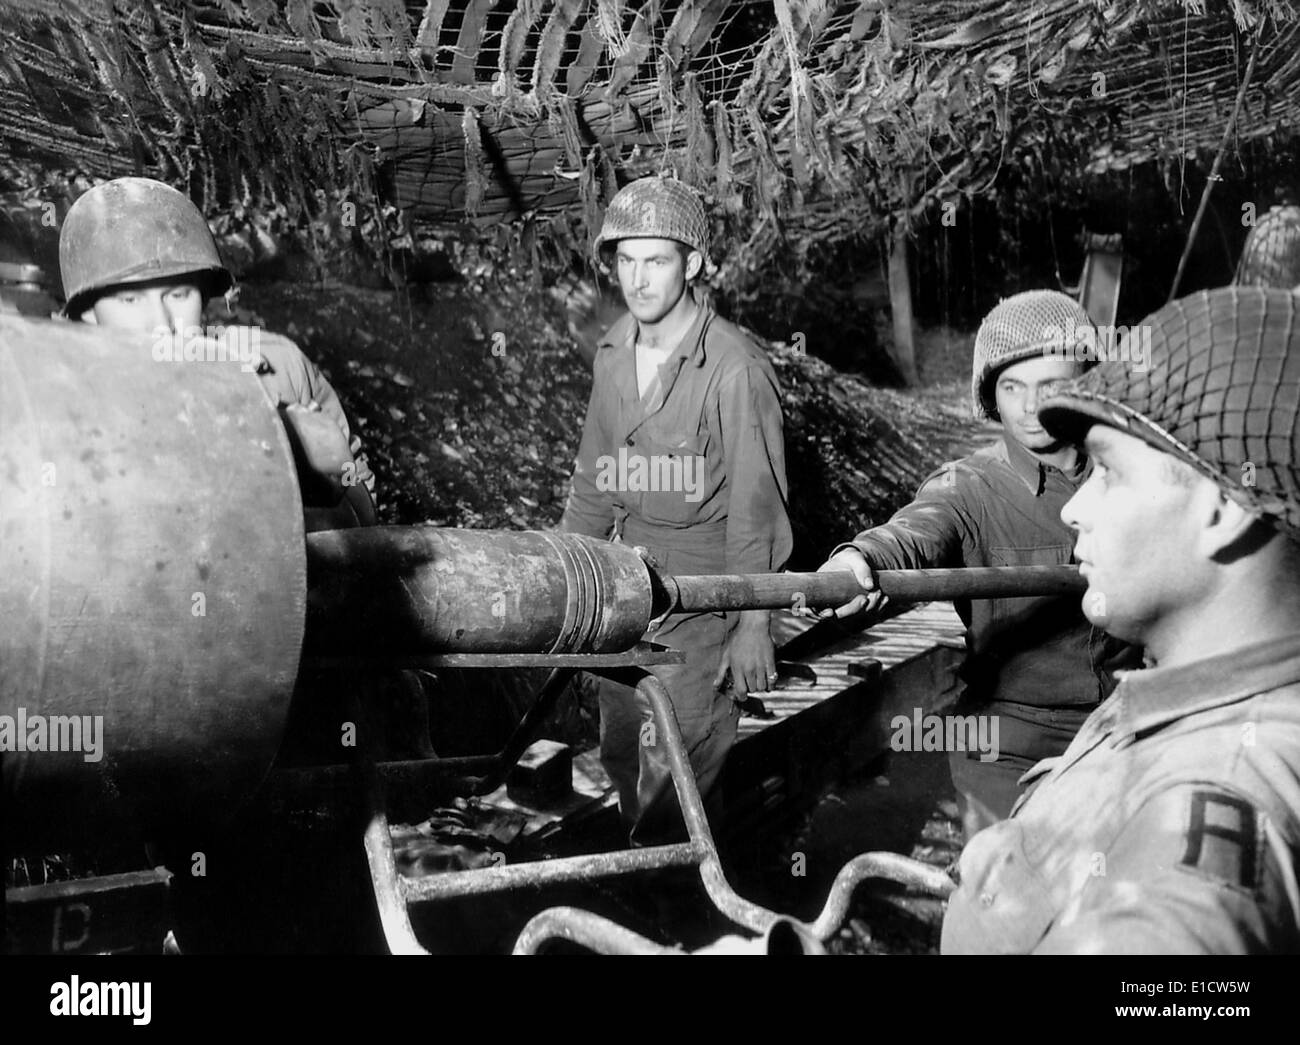 Barrel of a gun hi-res stock photography and images - Alamy